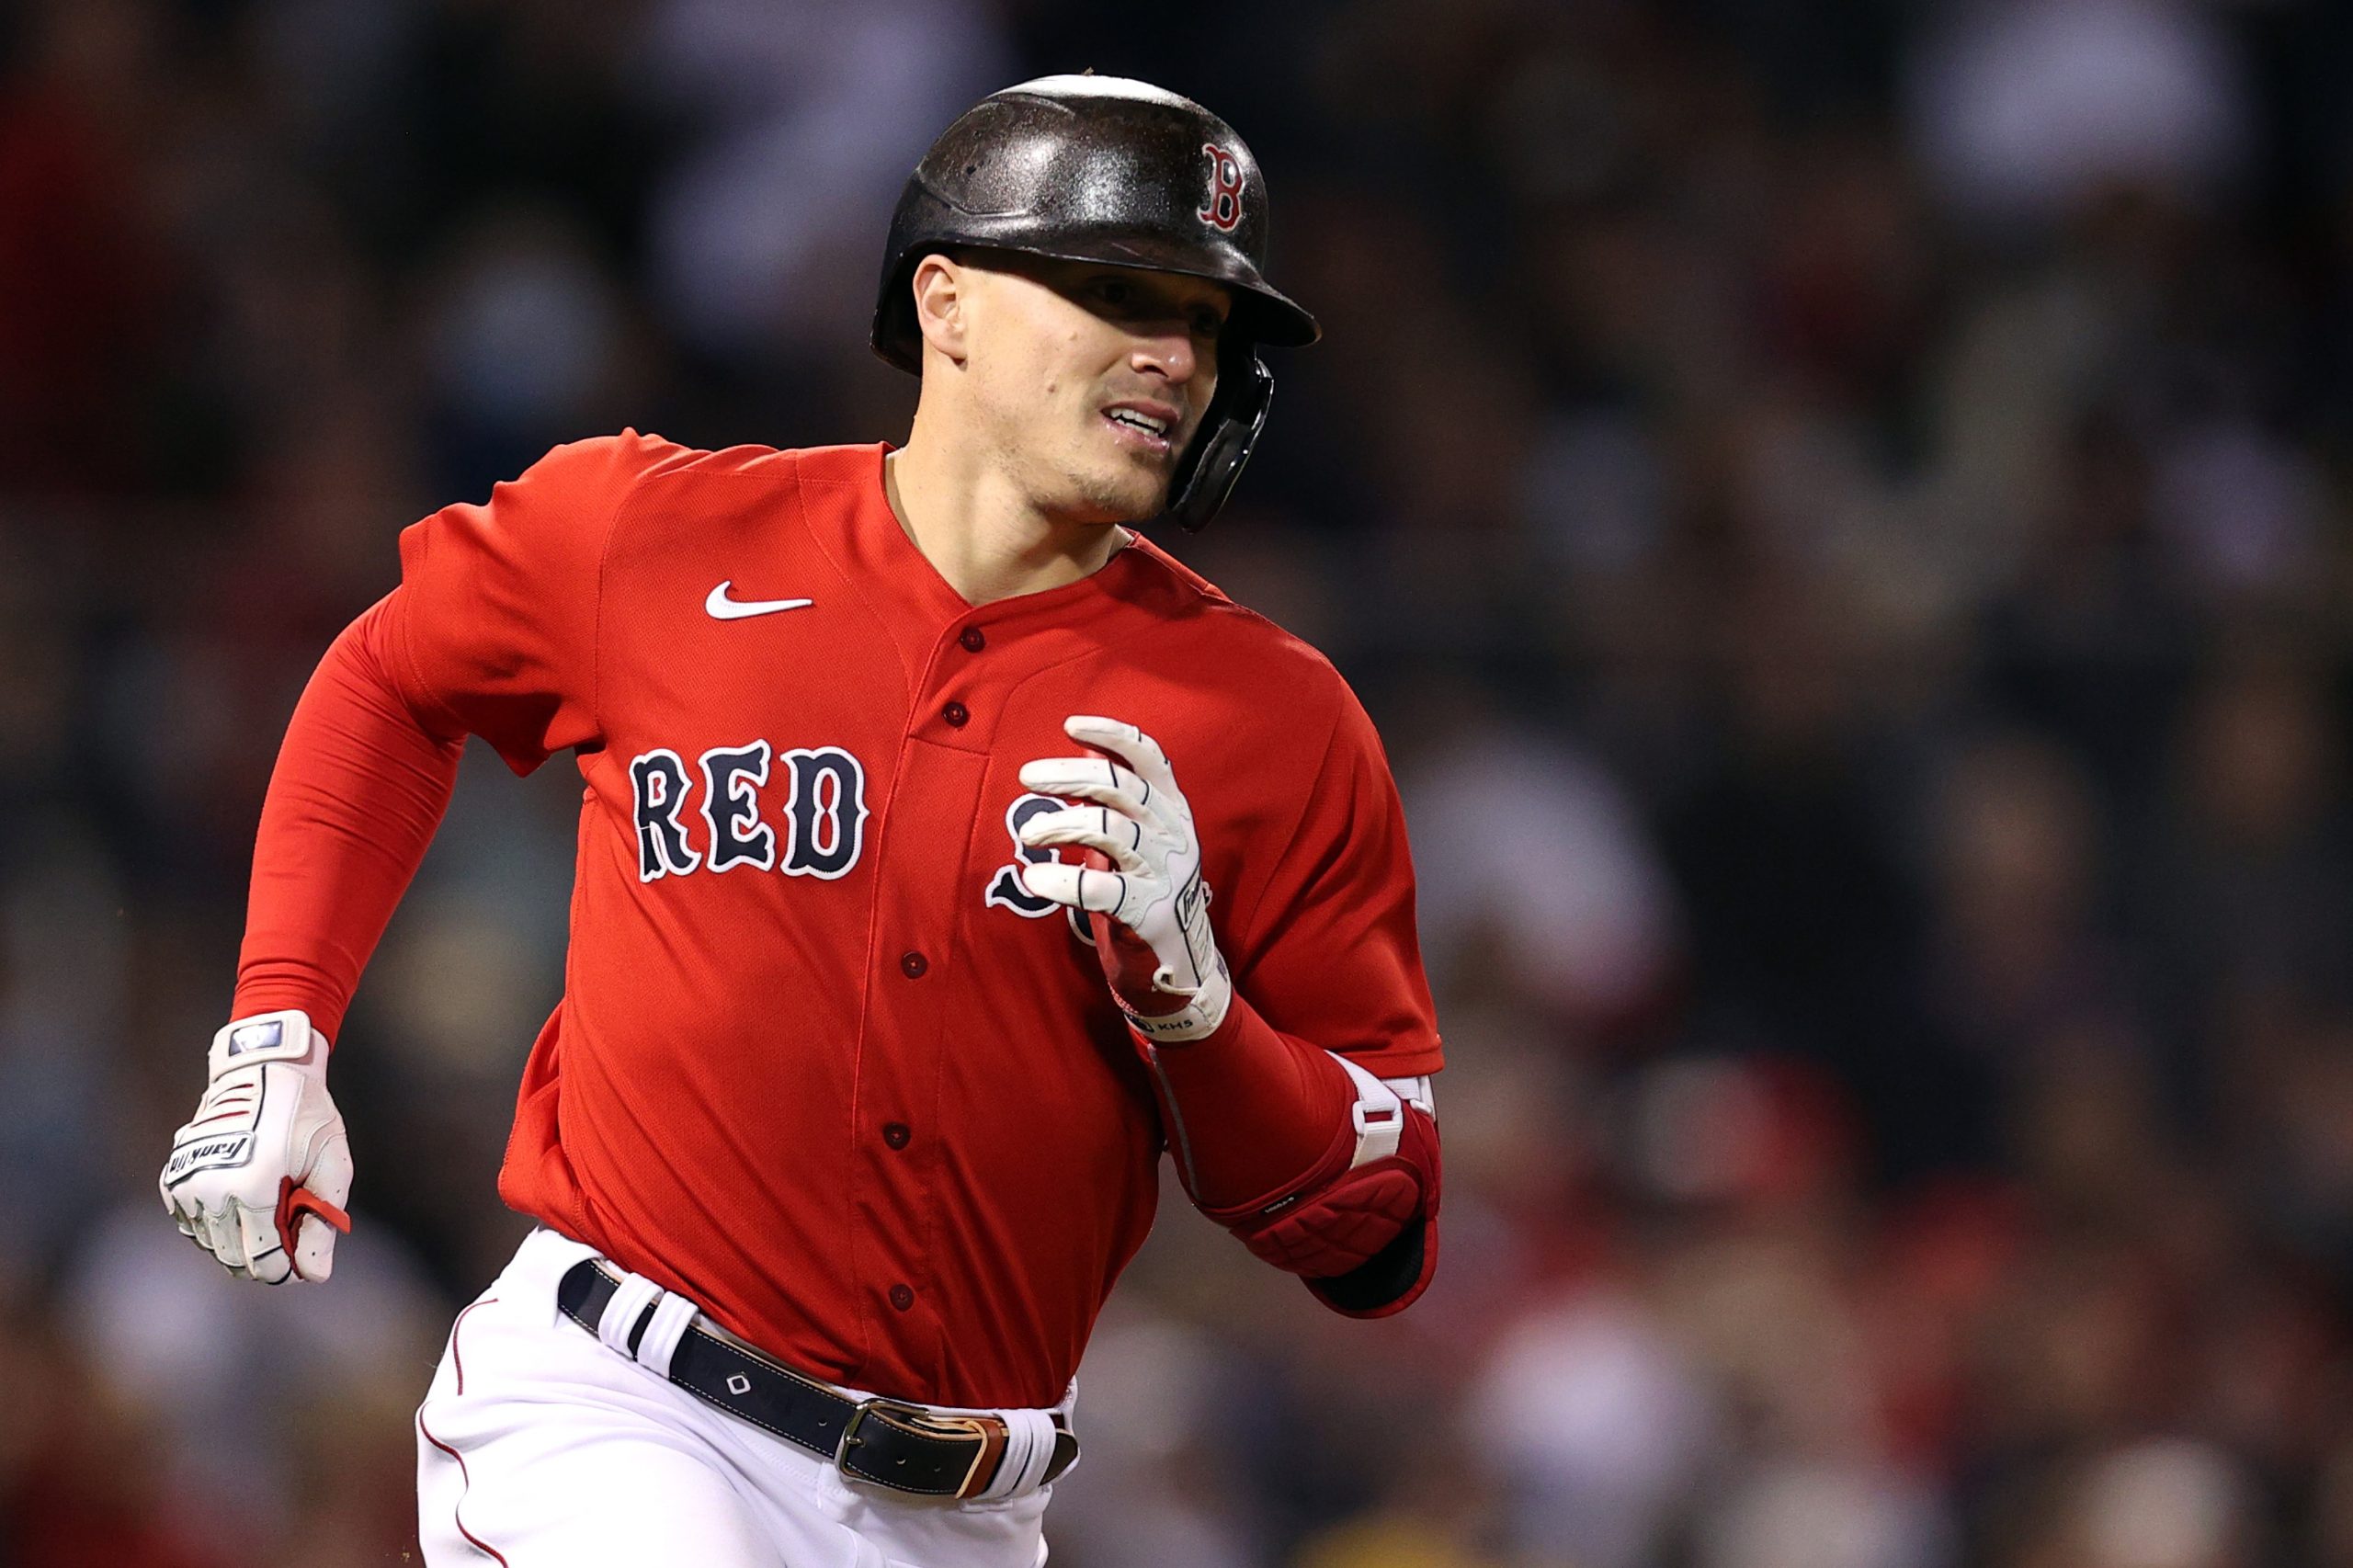 Kike Hernandez of the Boston Red Sox runs to first base.